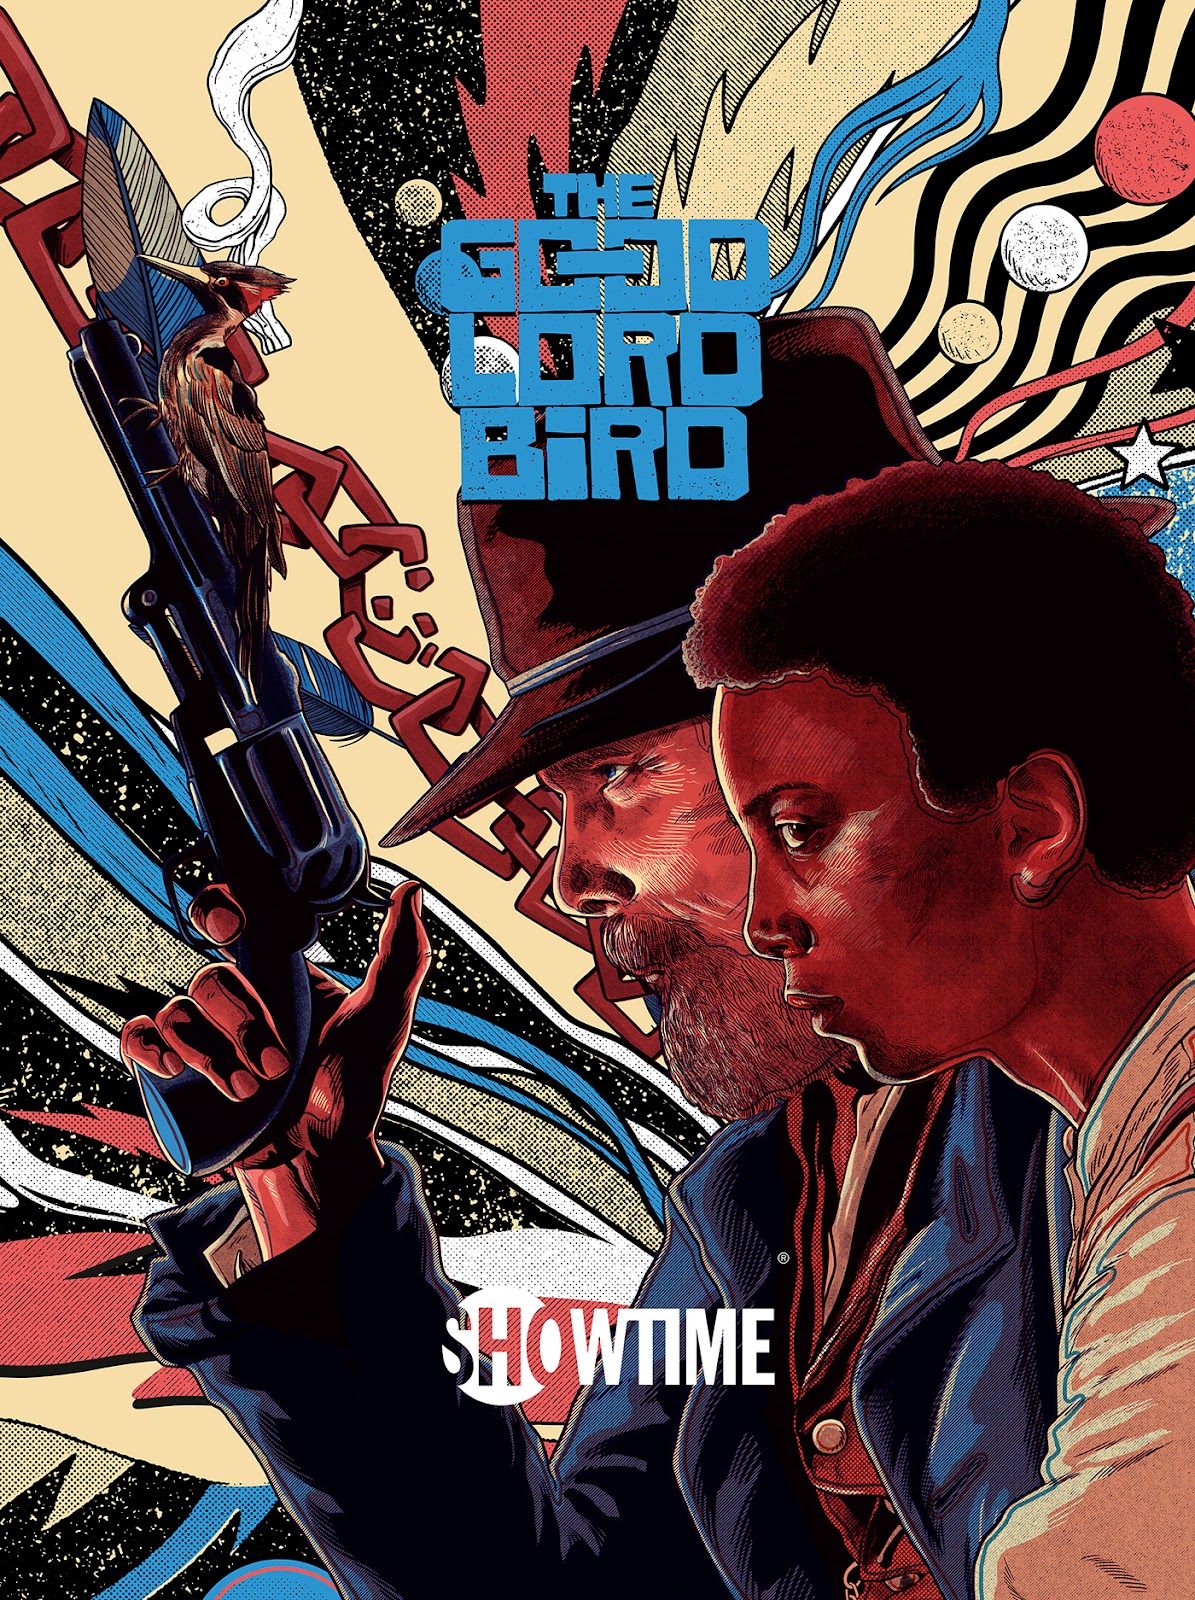 bird cbs pop poster series Showtime sxsw television tv united states